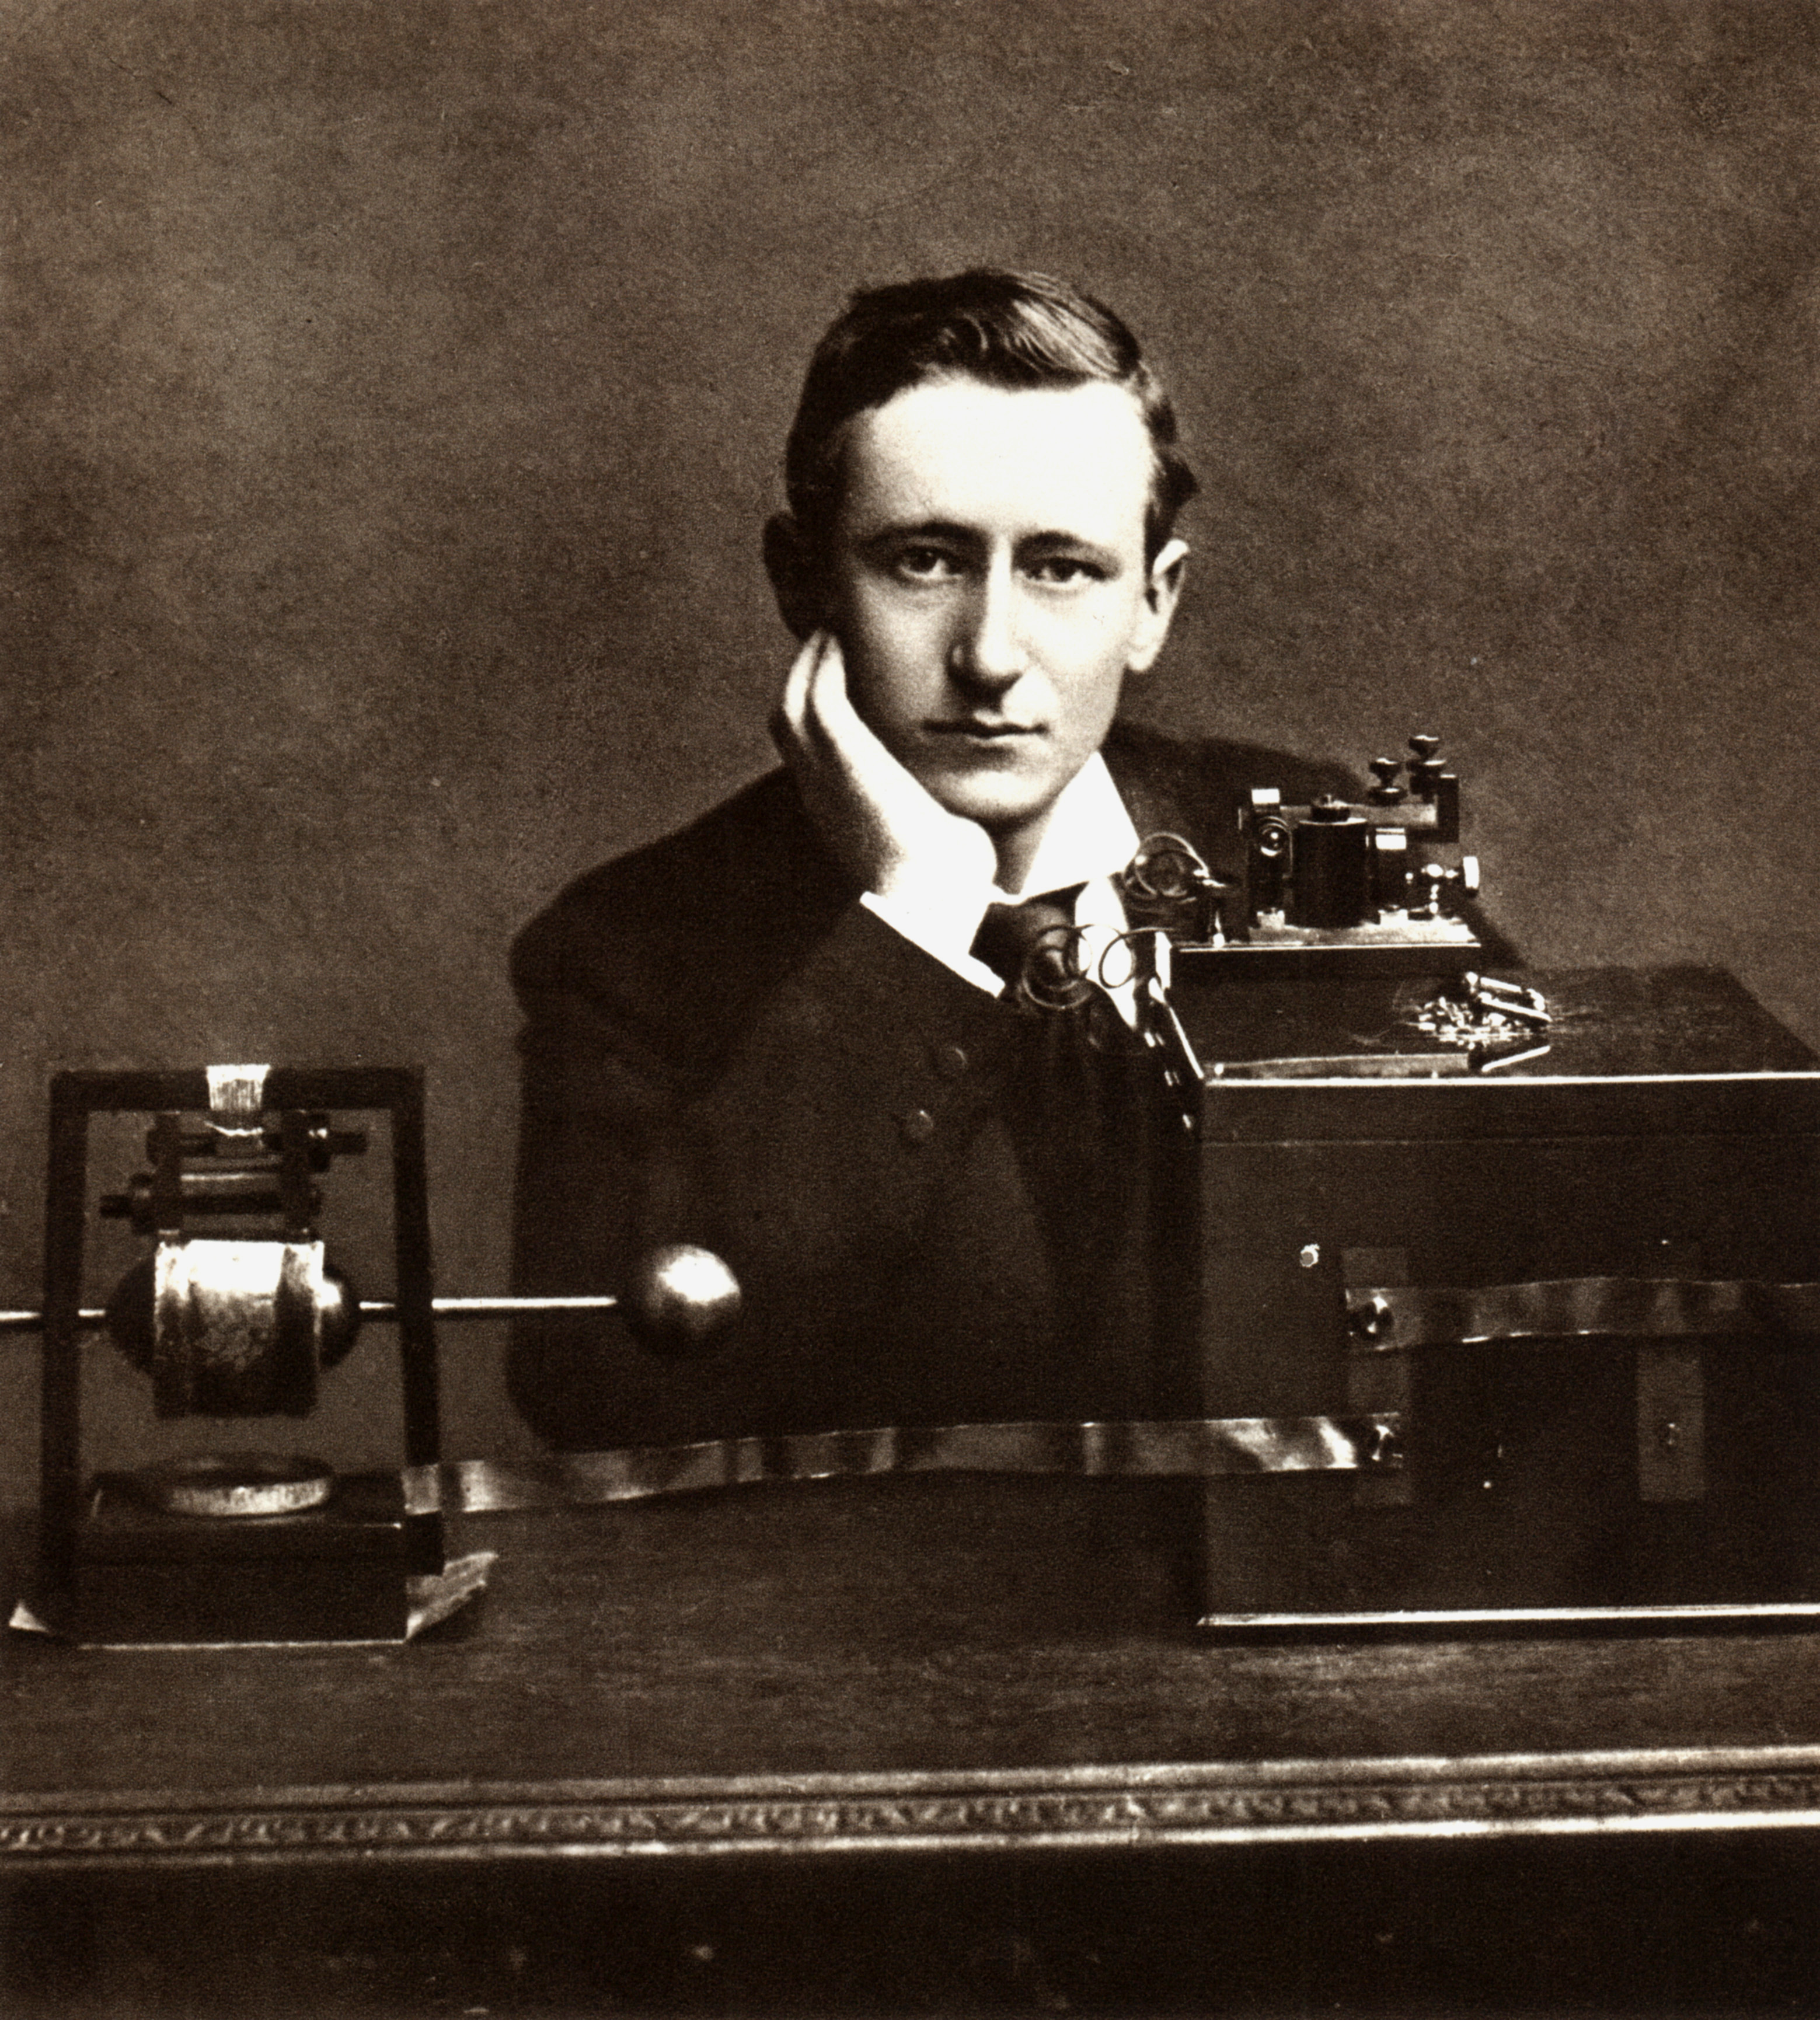 http://upload.wikimedia.org/wikipedia/commons/f/f6/Guglielmo_Marconi_posing.jpg